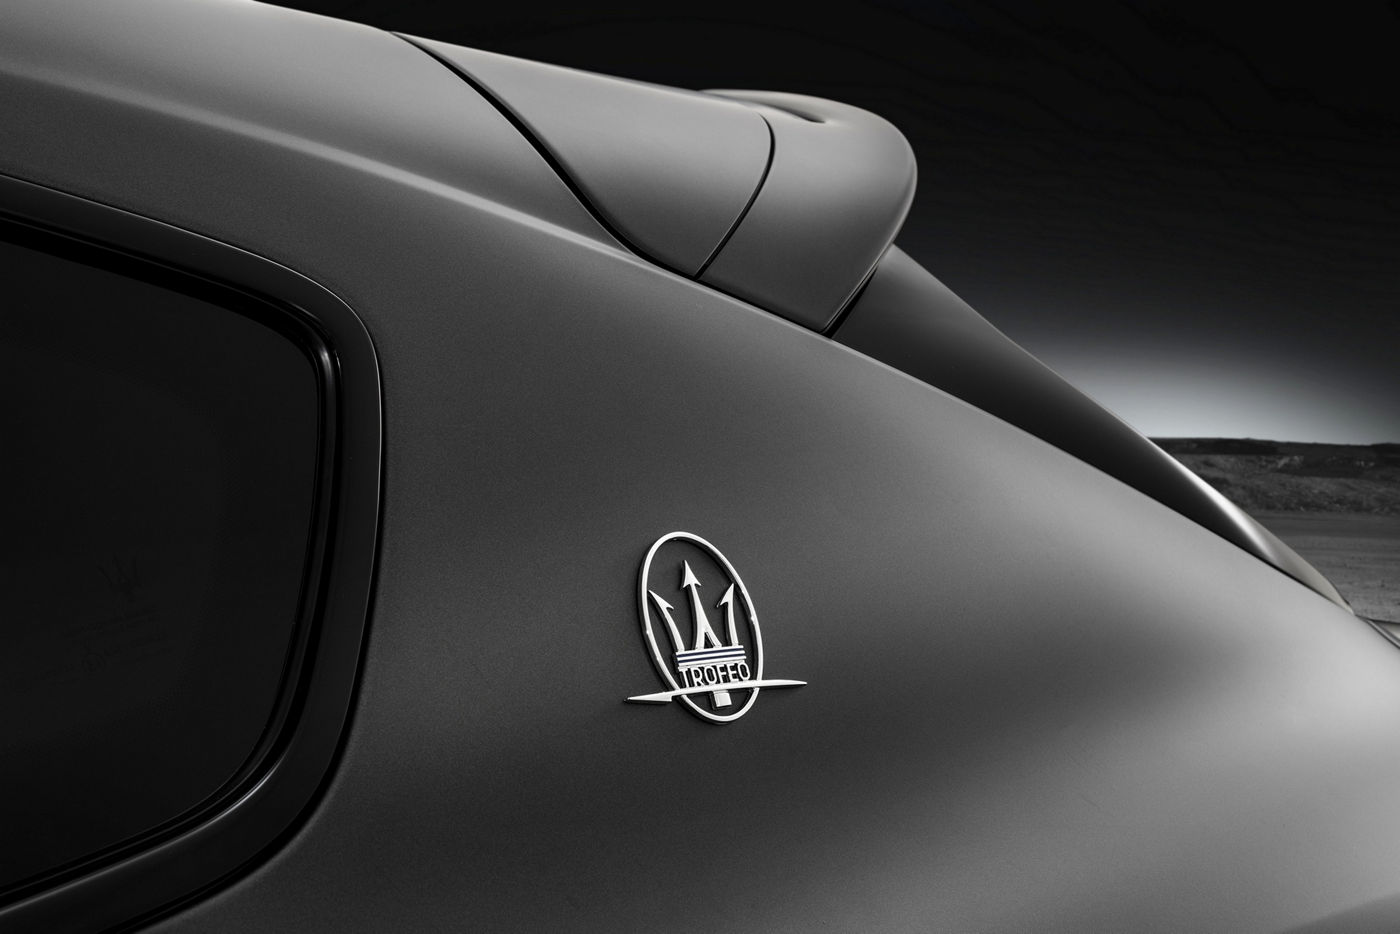 Focusing on the exclusive Maserati Trofeo Logo on Maserati Levante Trofeo body